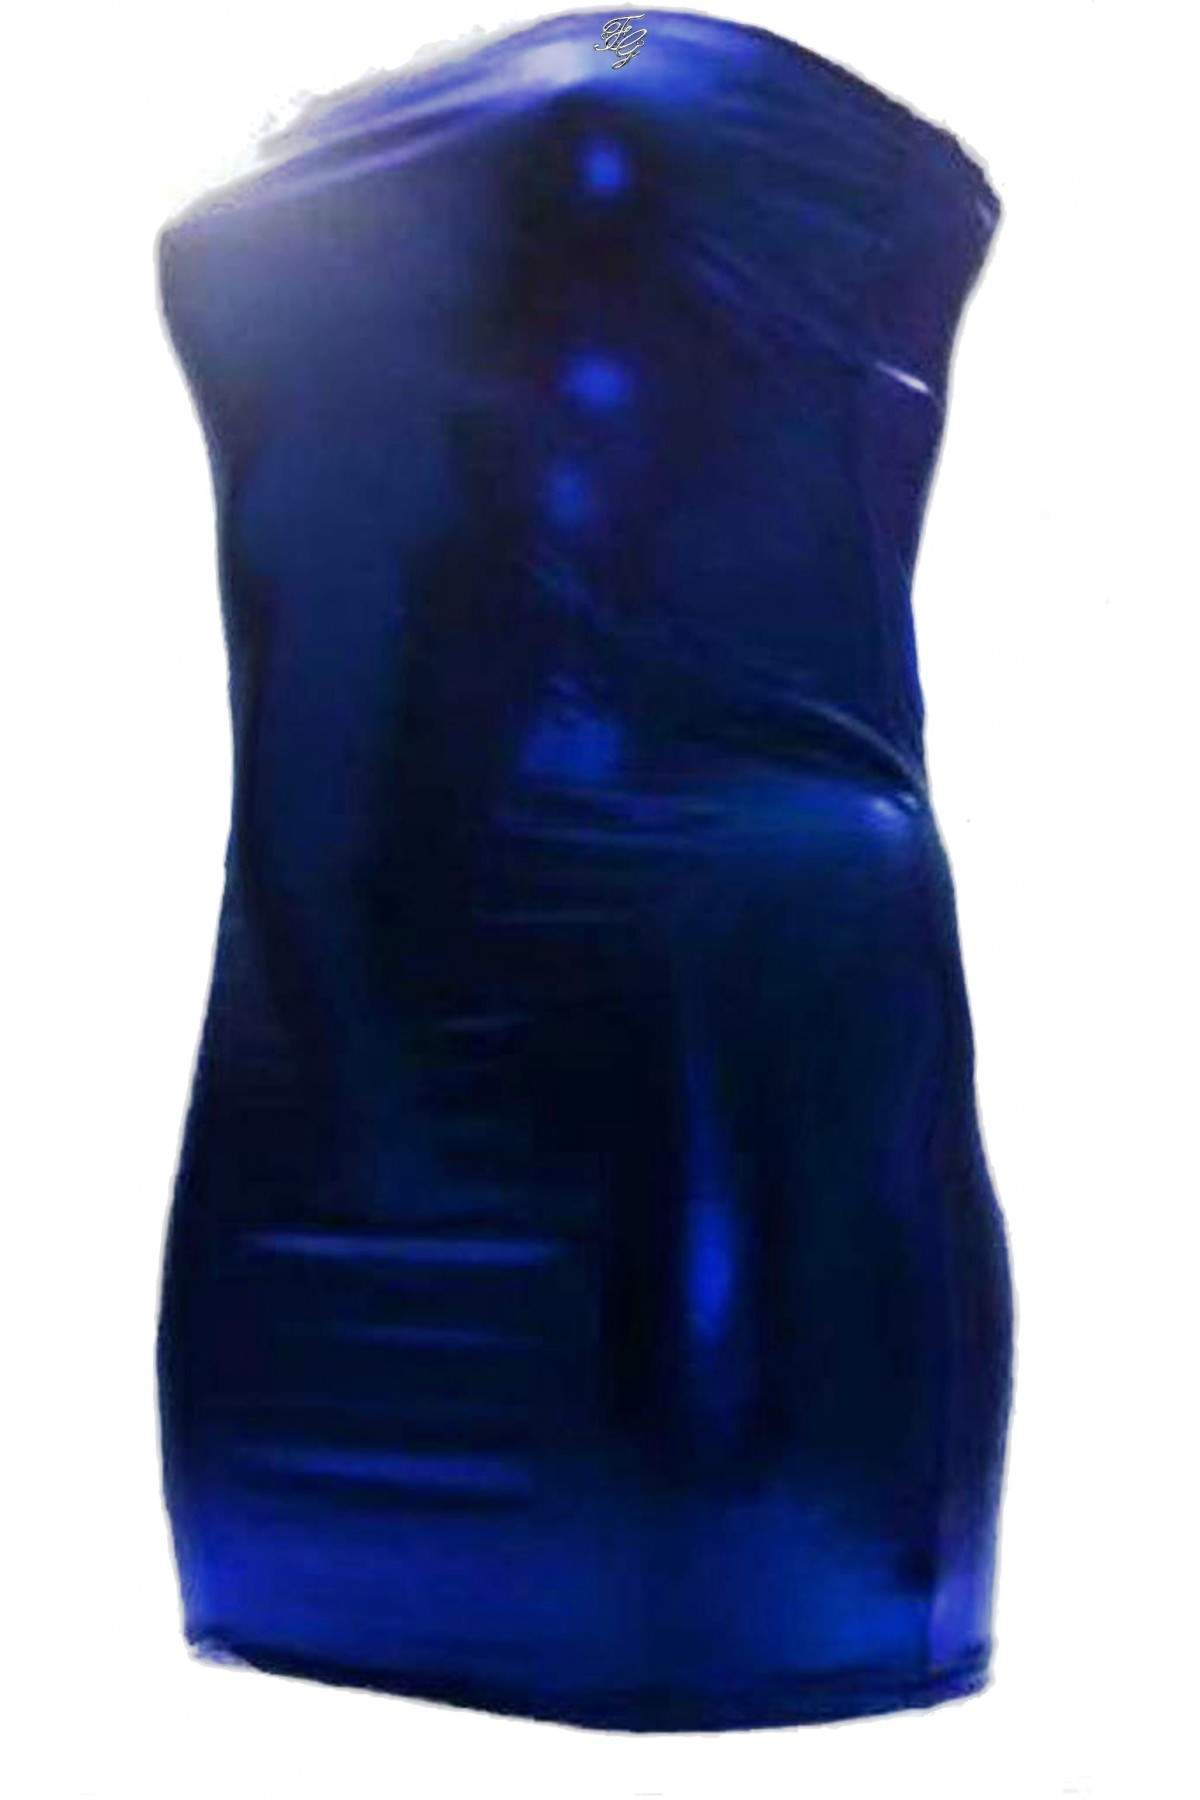 Gogo Wetlook Bandeau Dress Blue Sizes 44 - 52 lengths to 75 cm 30,25 € - 